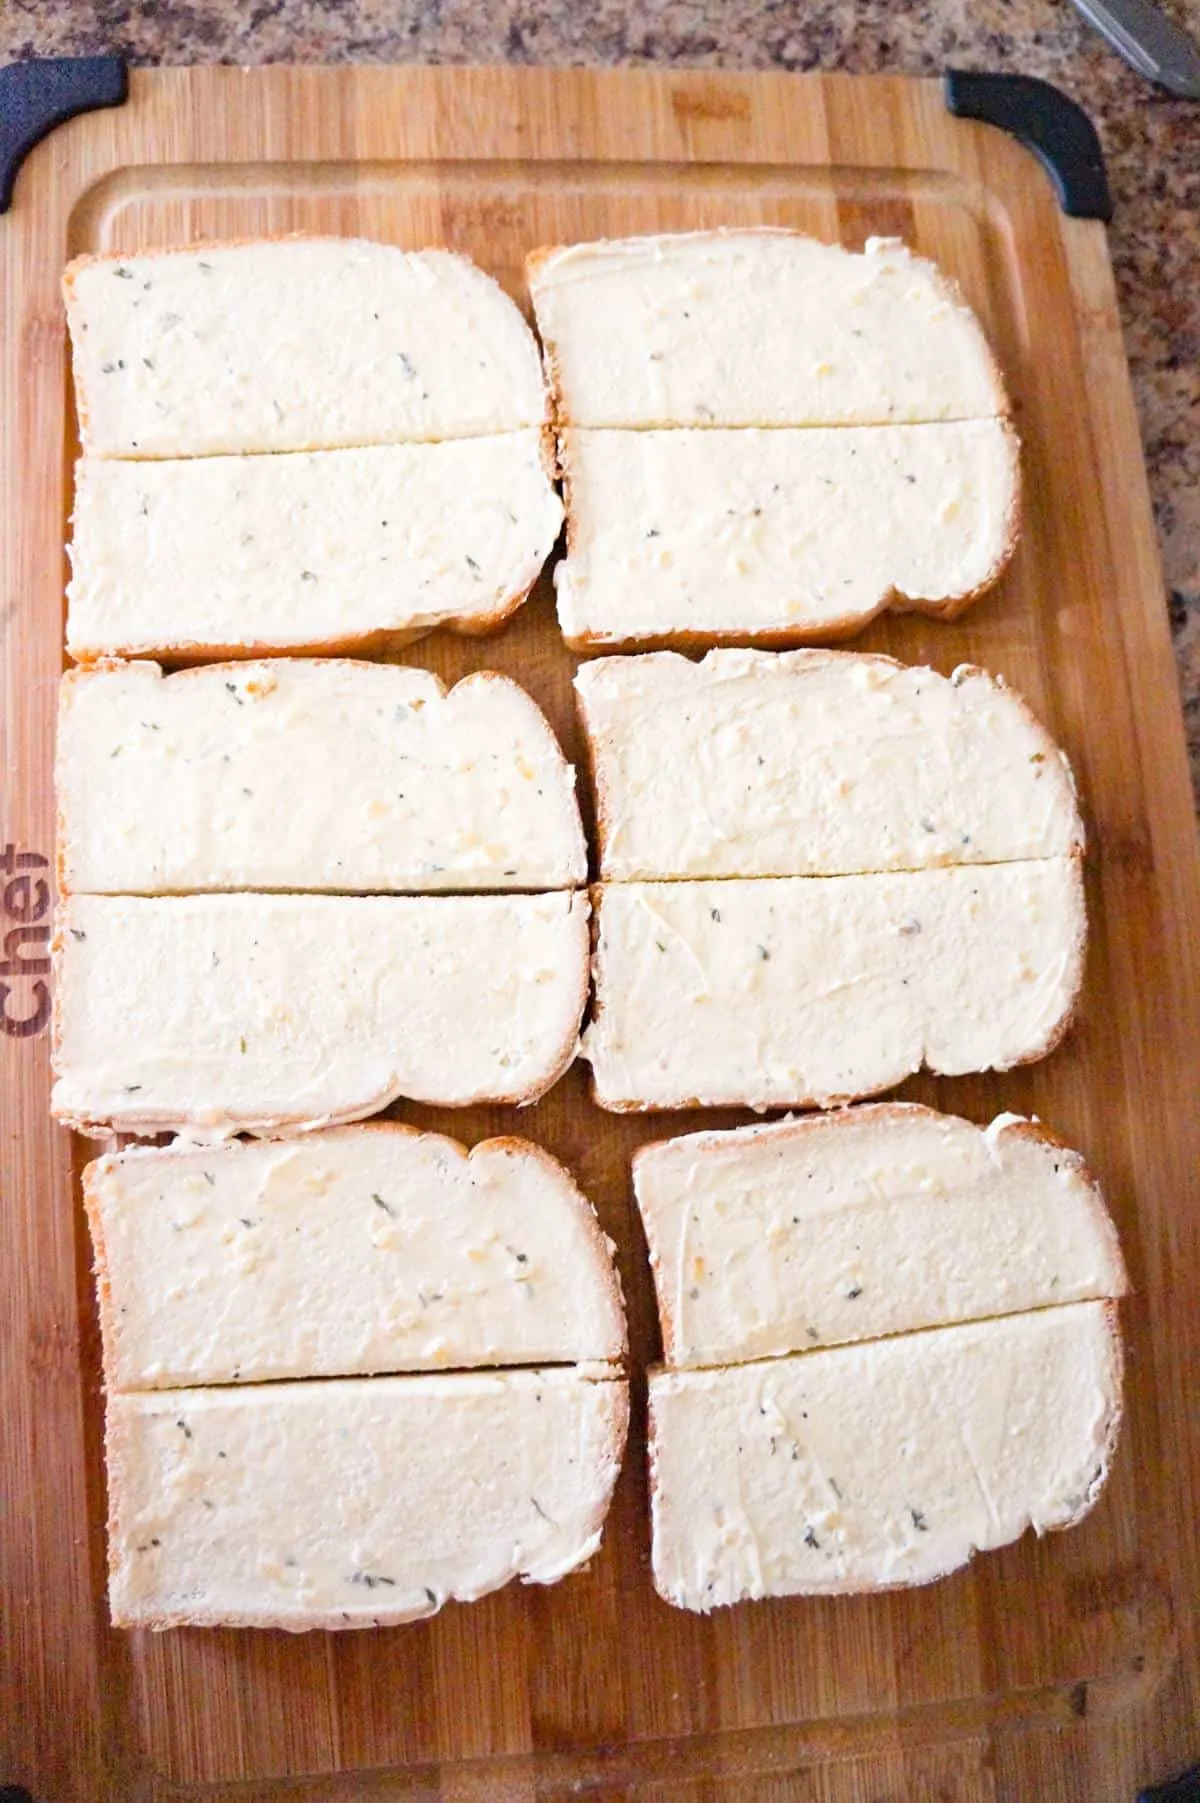 slices of bread with garlic margarine cut in half